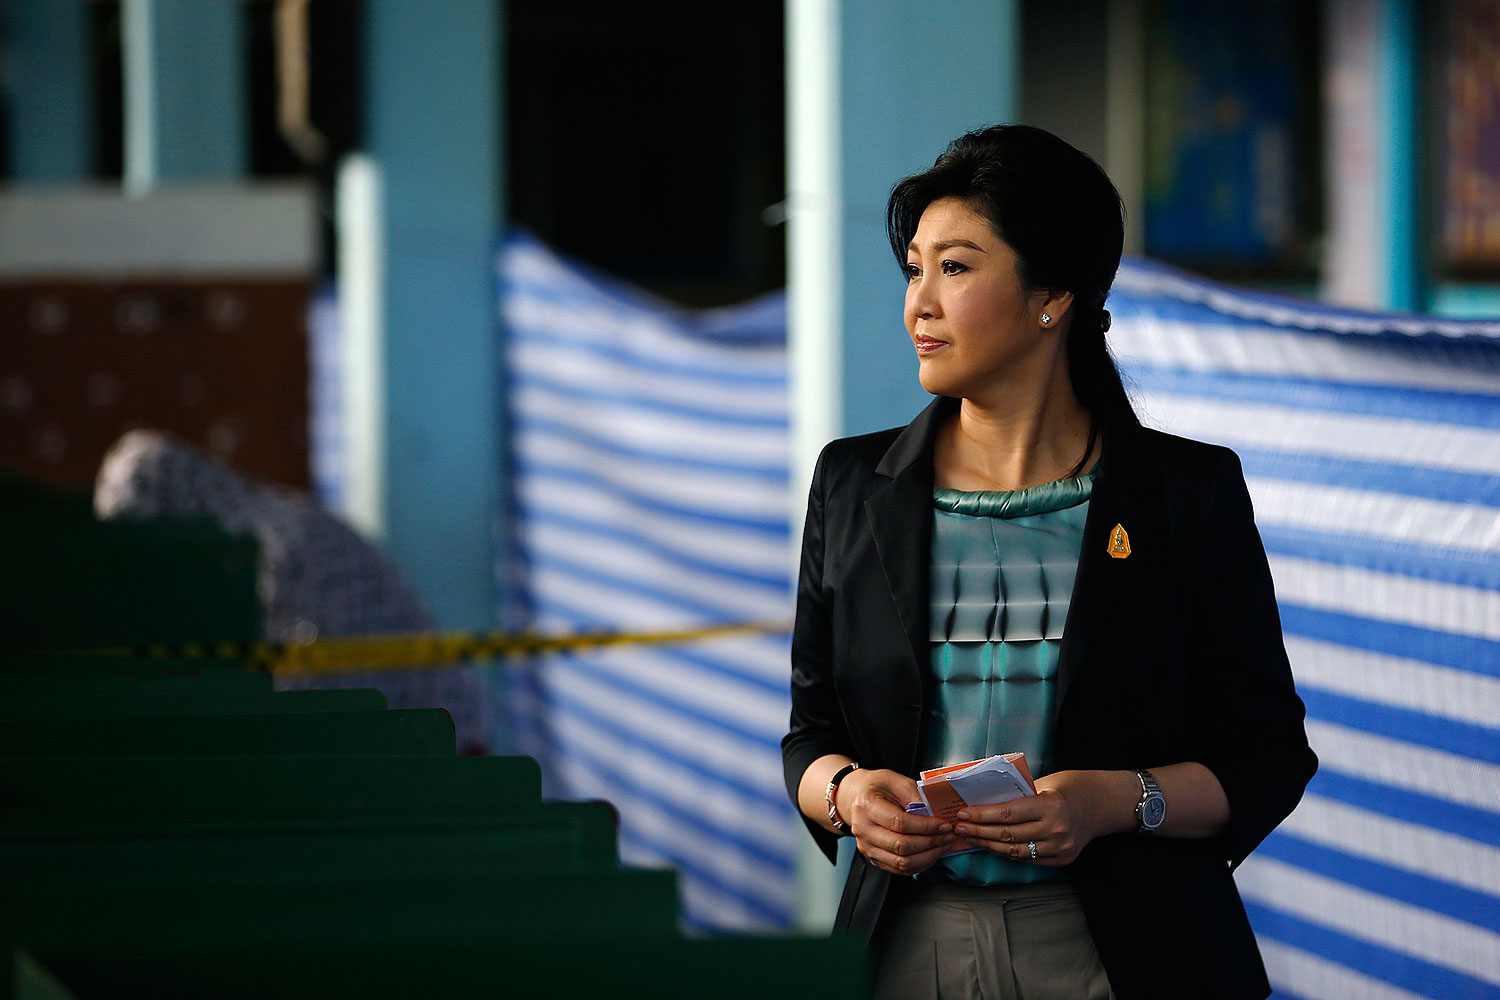 Thai Prime Minister Yingluck Shinawatra holds her ballot before casting it at a polling station in Bangkok Feb. 2, 2014 (Damir Sagolj / Reuters)